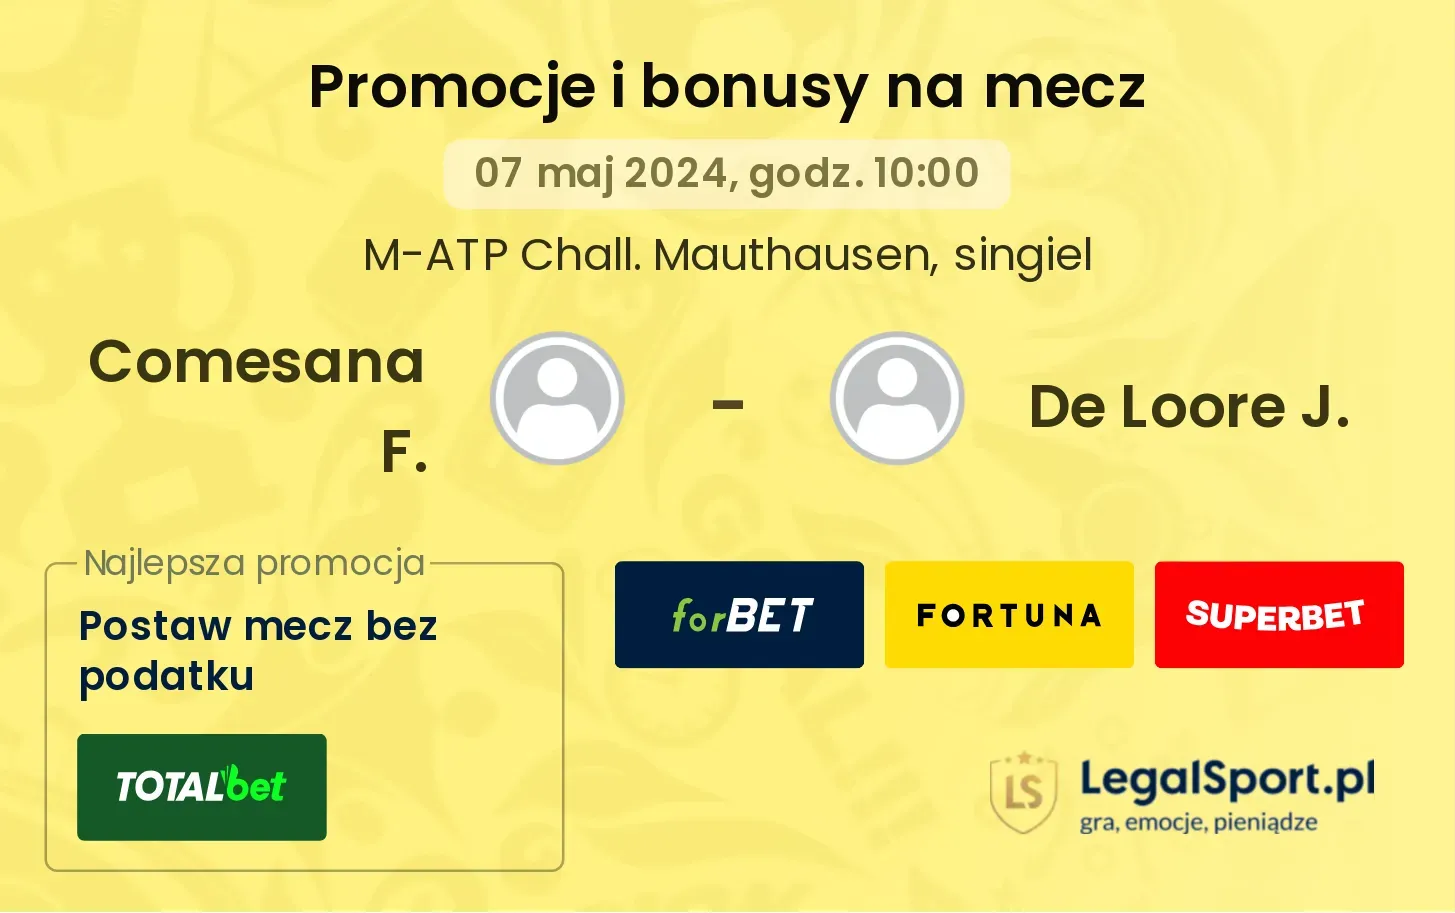 Comesana F. - De Loore J. promocje bonusy na mecz